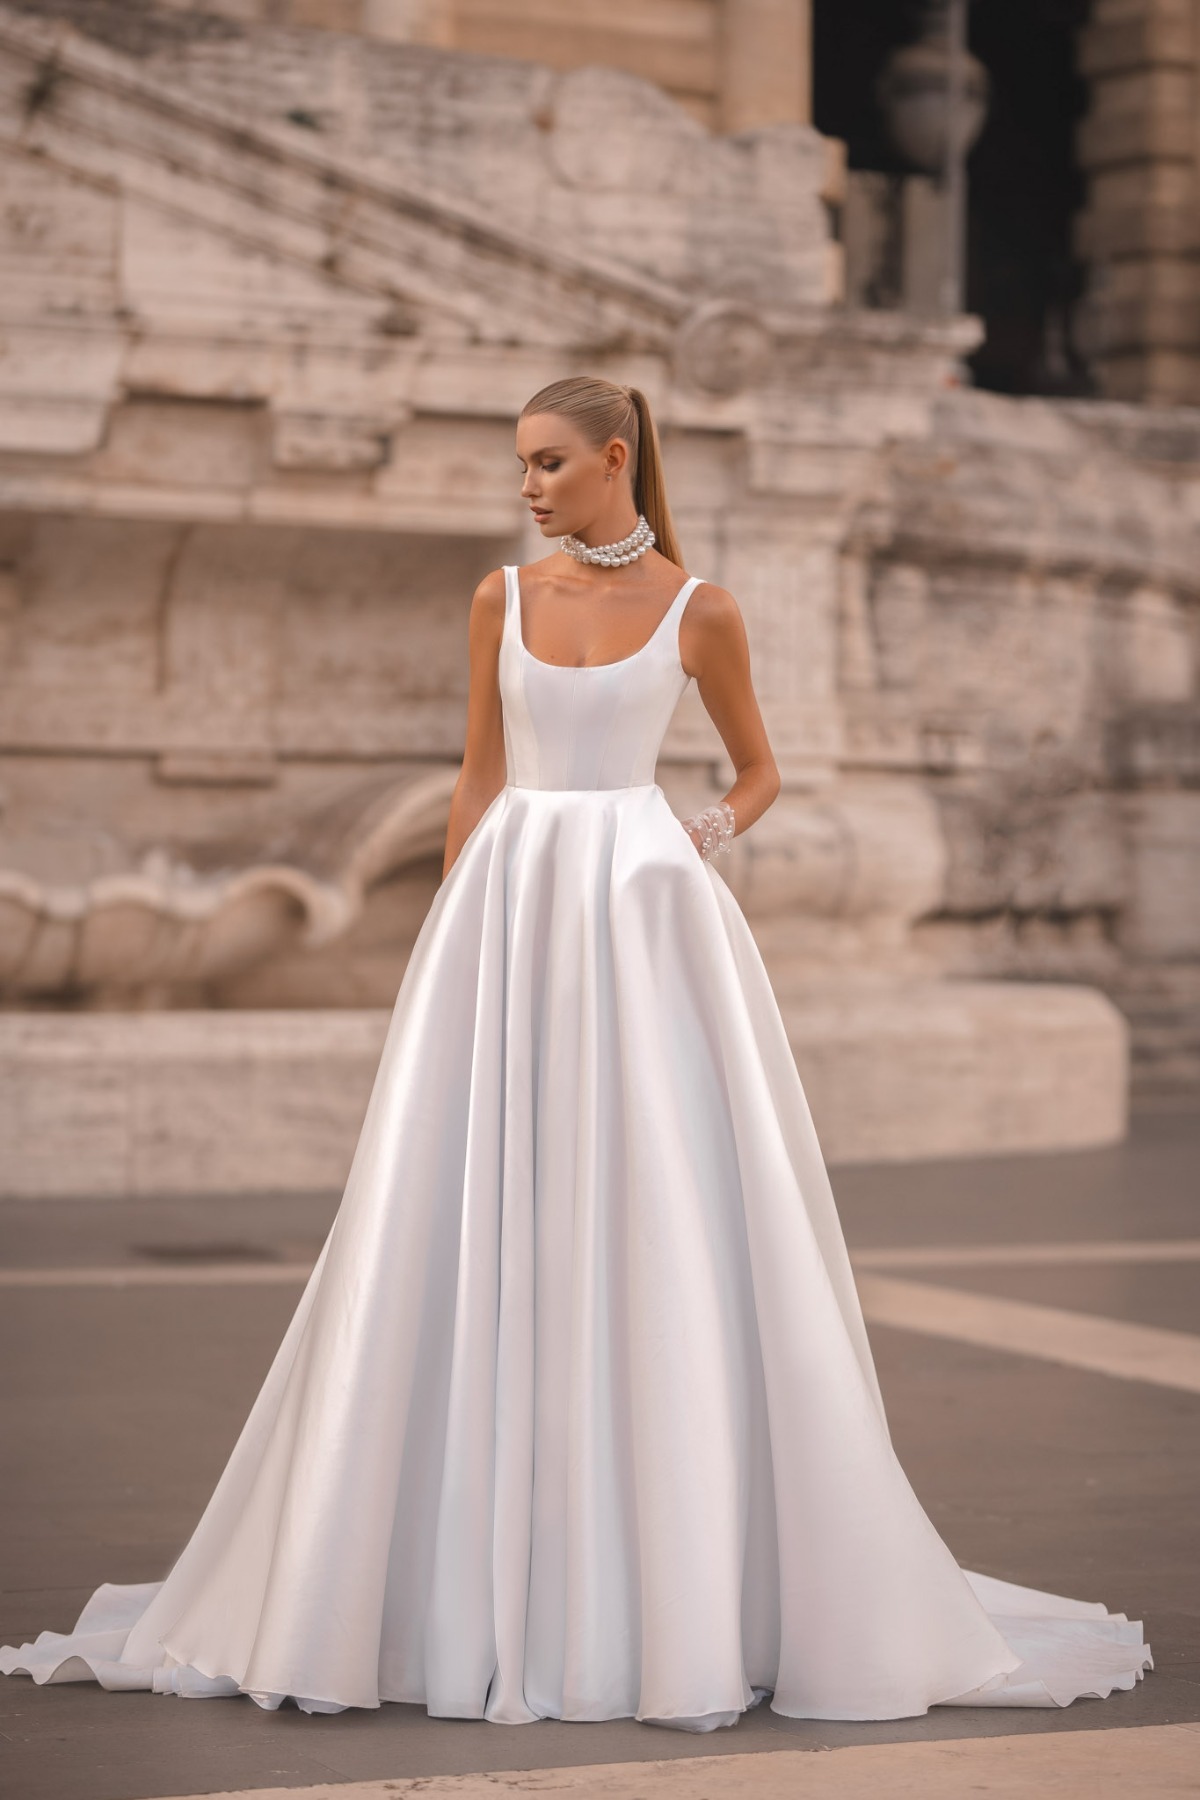 sculpted white wedding dress from Berta 2023 wedding dress collection